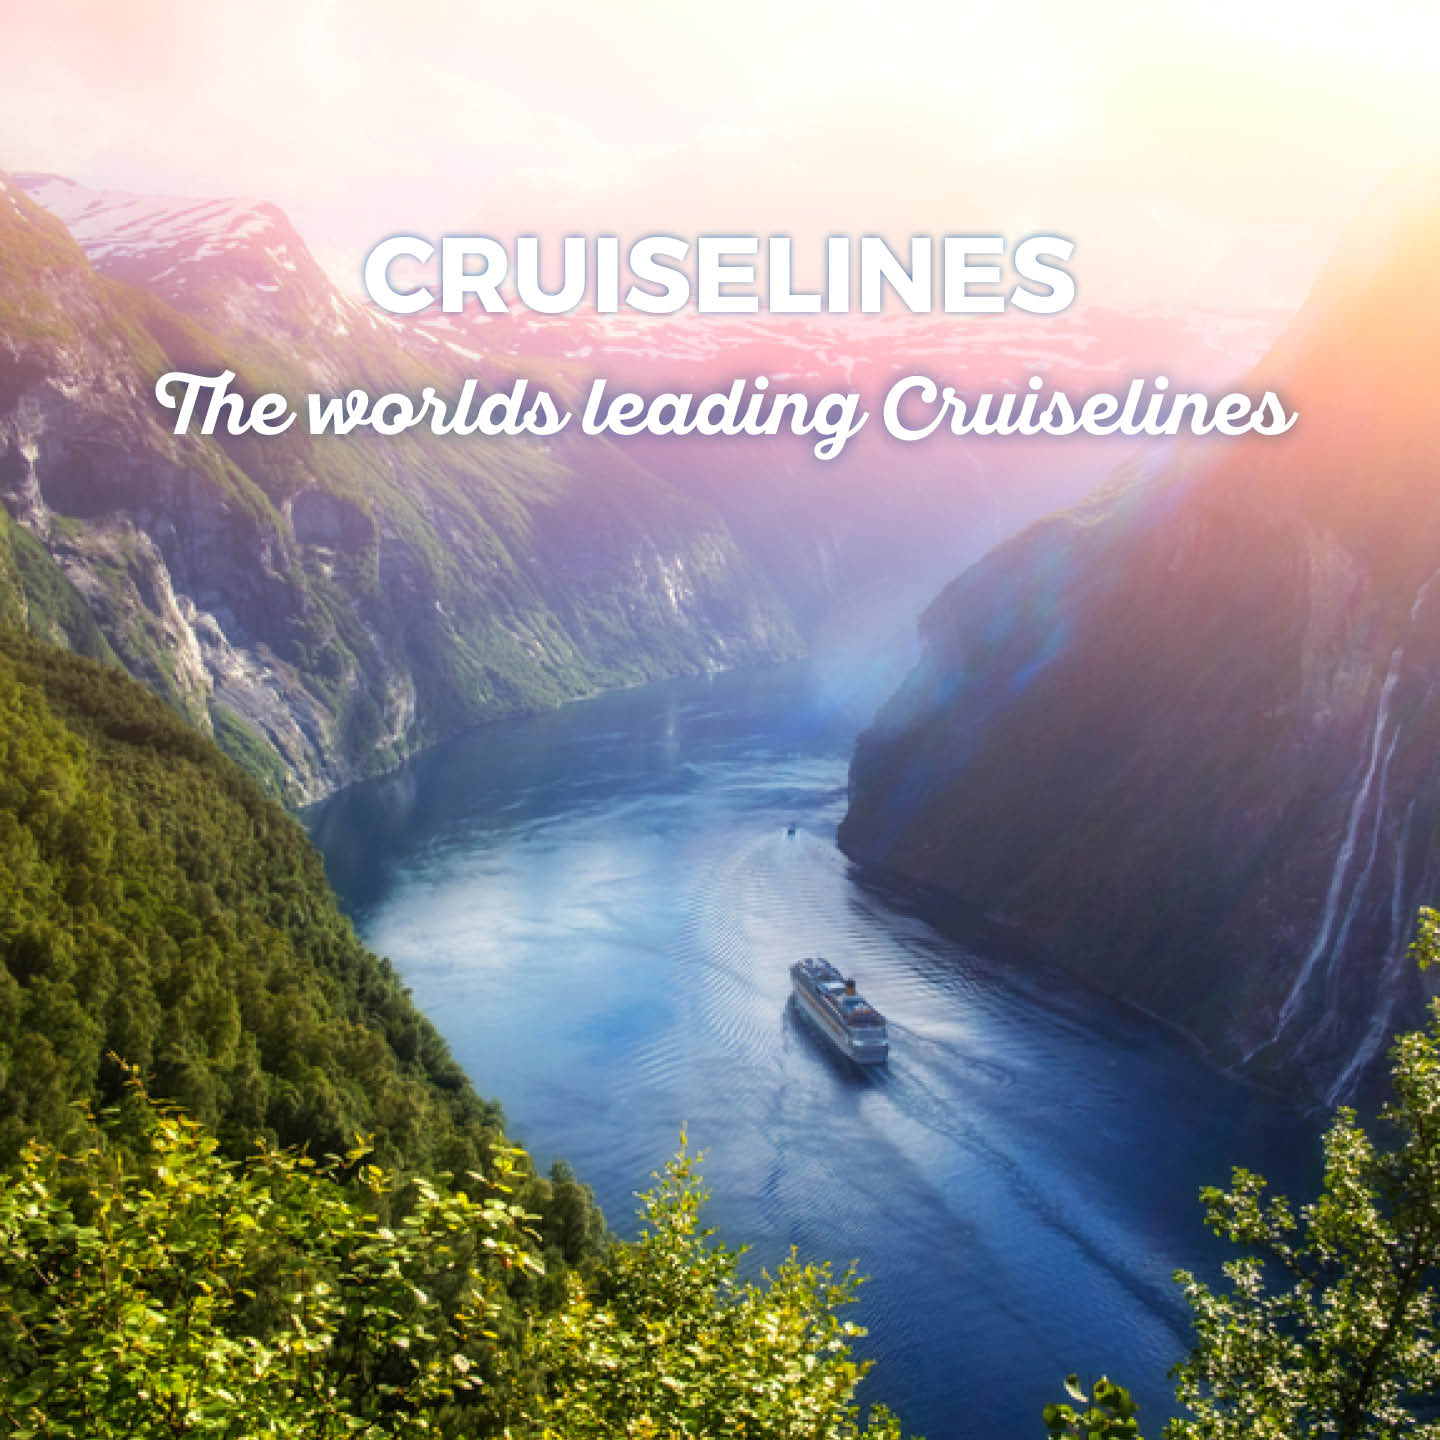 cruiselines-landing-2-thumb.jpg